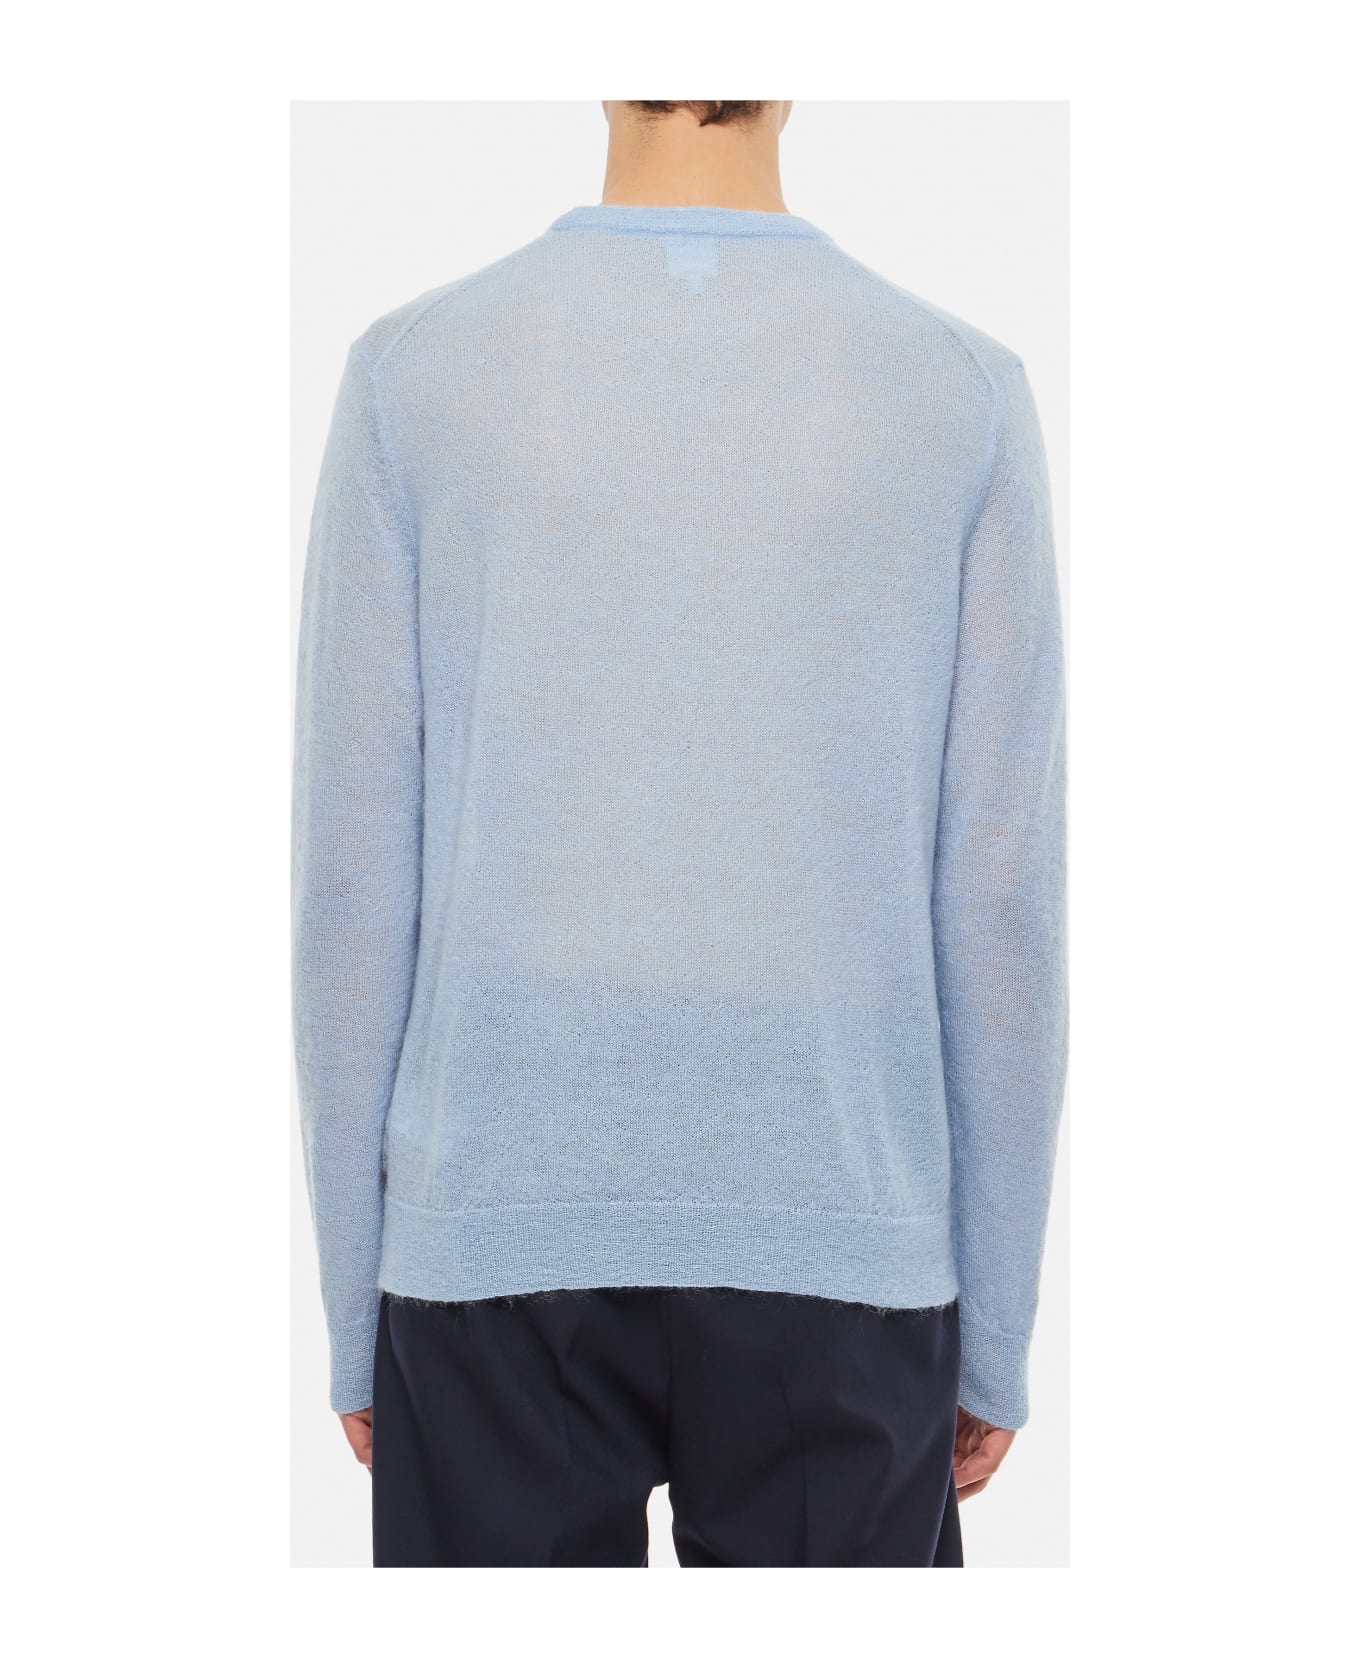 Paul Smith Sweater Crewneck - Clear Blue